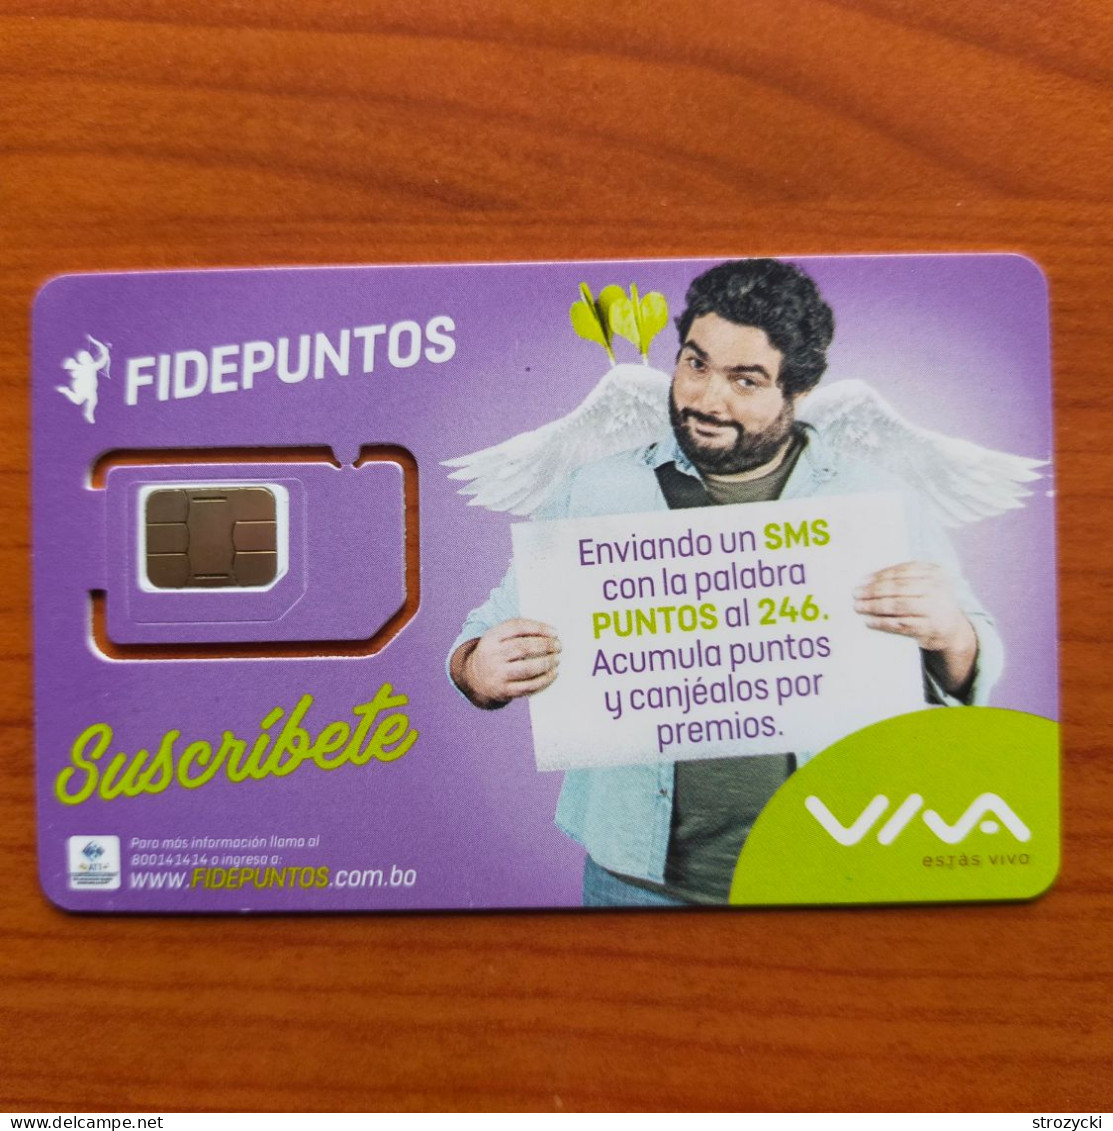 Bolivia - Viva - Fidepuntos - Suscríbete (standard,micro,nano SIM) - GSM SIM - Mint - Bolivia